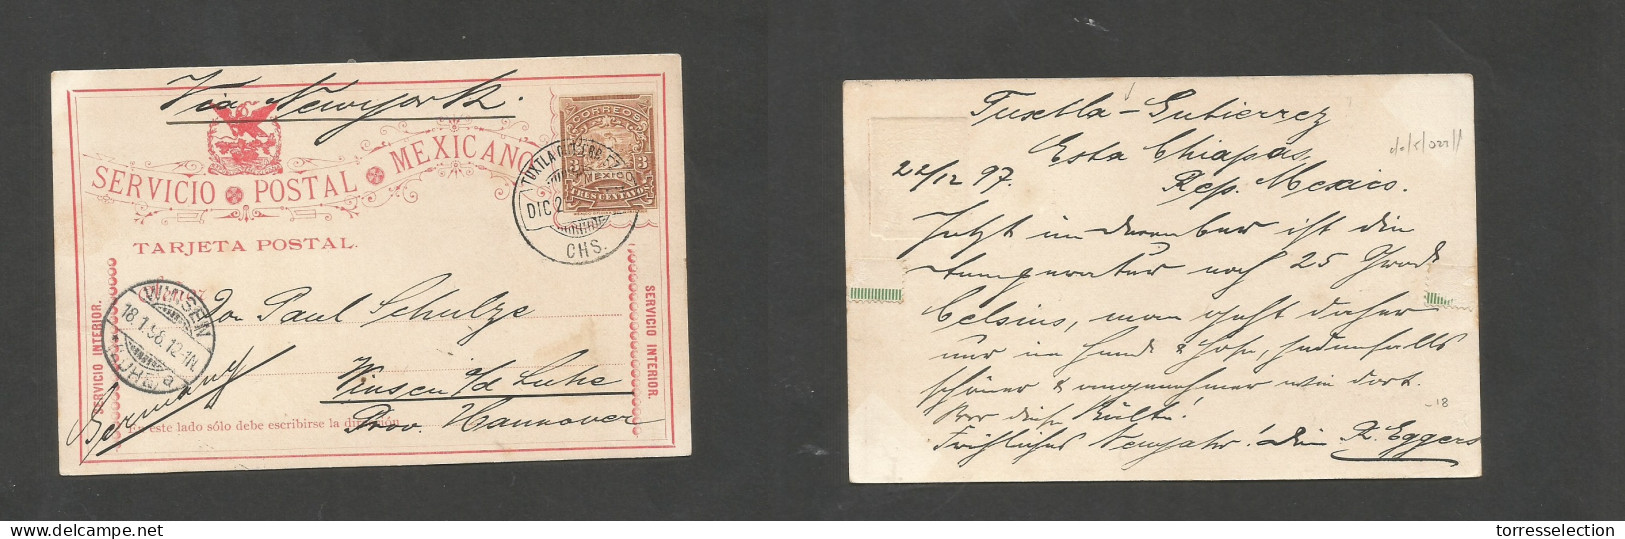 MEXICO - Stationery. 1897 (21 Dec) Tuxla Guerrero - Germany, Winsen (18 Jan 98) 3c Brown Militar Issue Stat Card. SPM. F - México